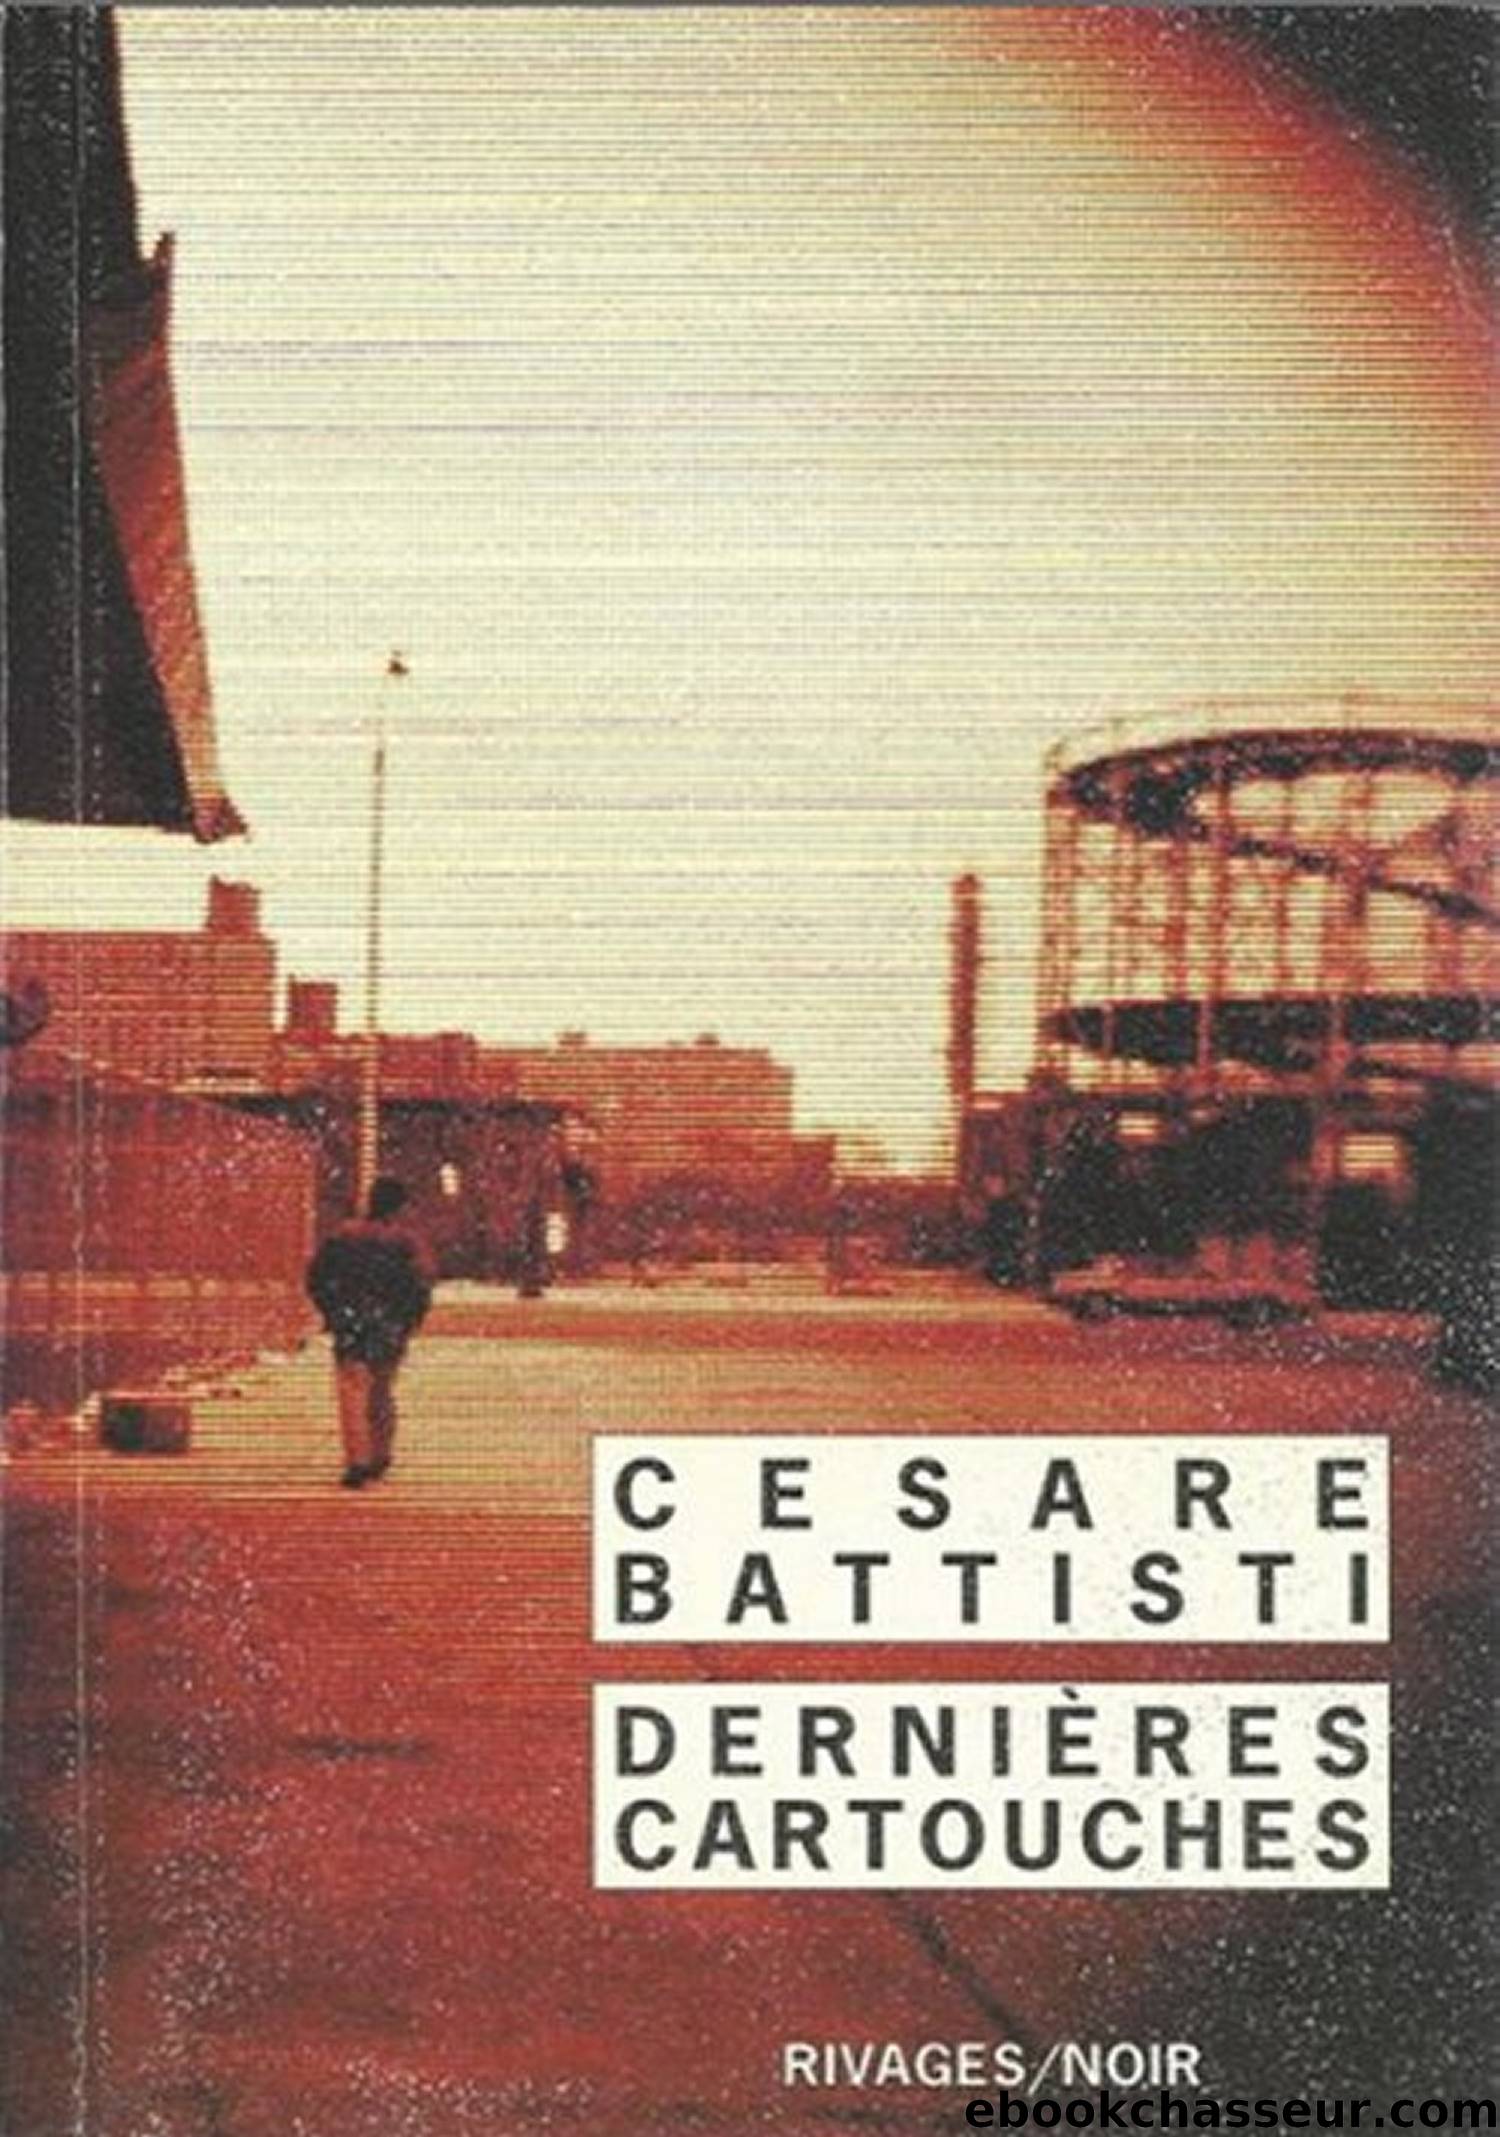 DerniÃ¨res cartouches by Battisti Cesare